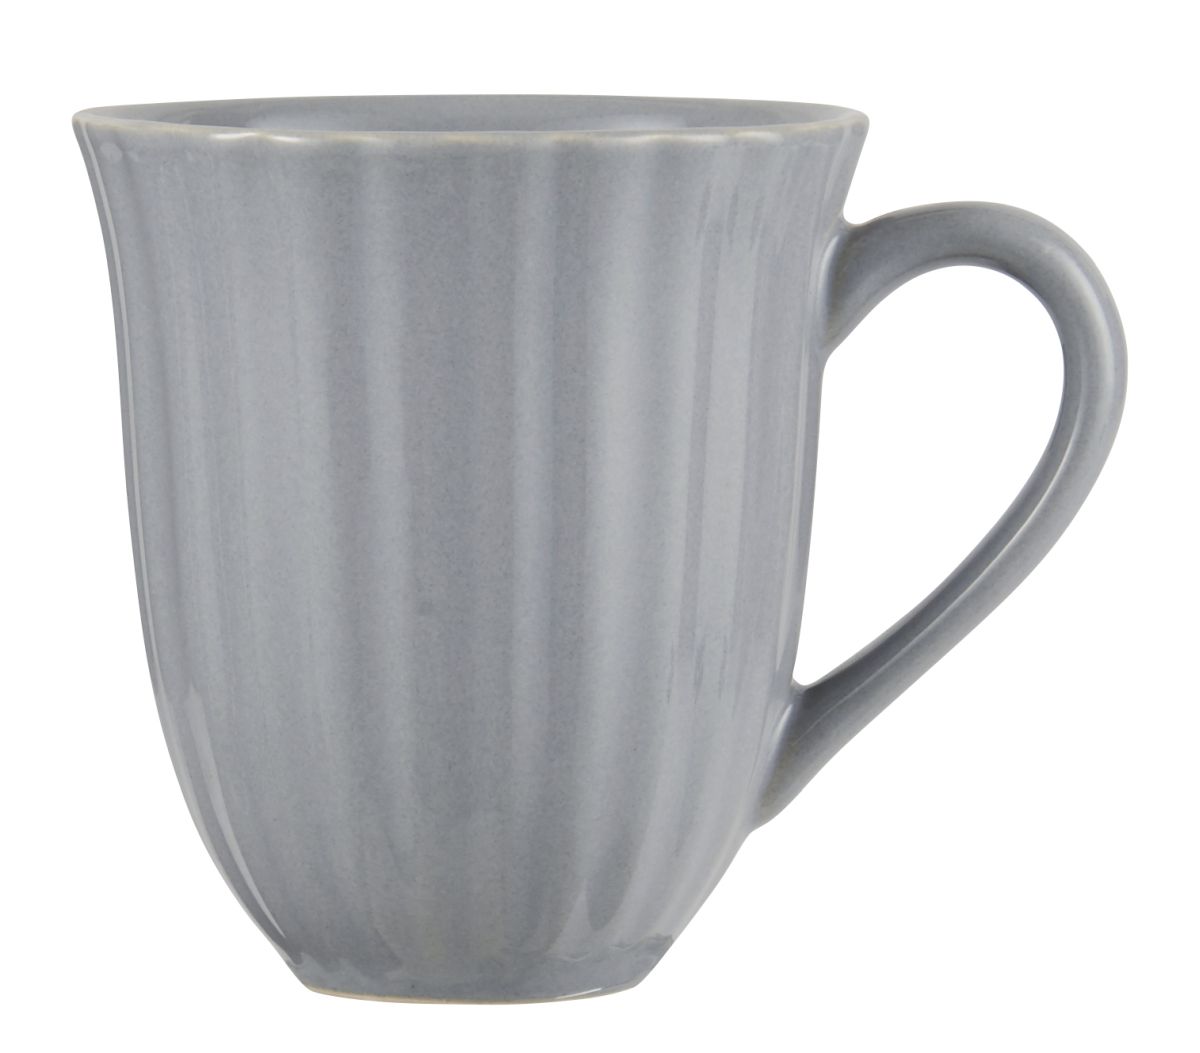 P cup. Чашка IB Laursen. Чашки, кружки IB Laursen. Чашки серые 300 мл. French Grey цвет IB Laursen.